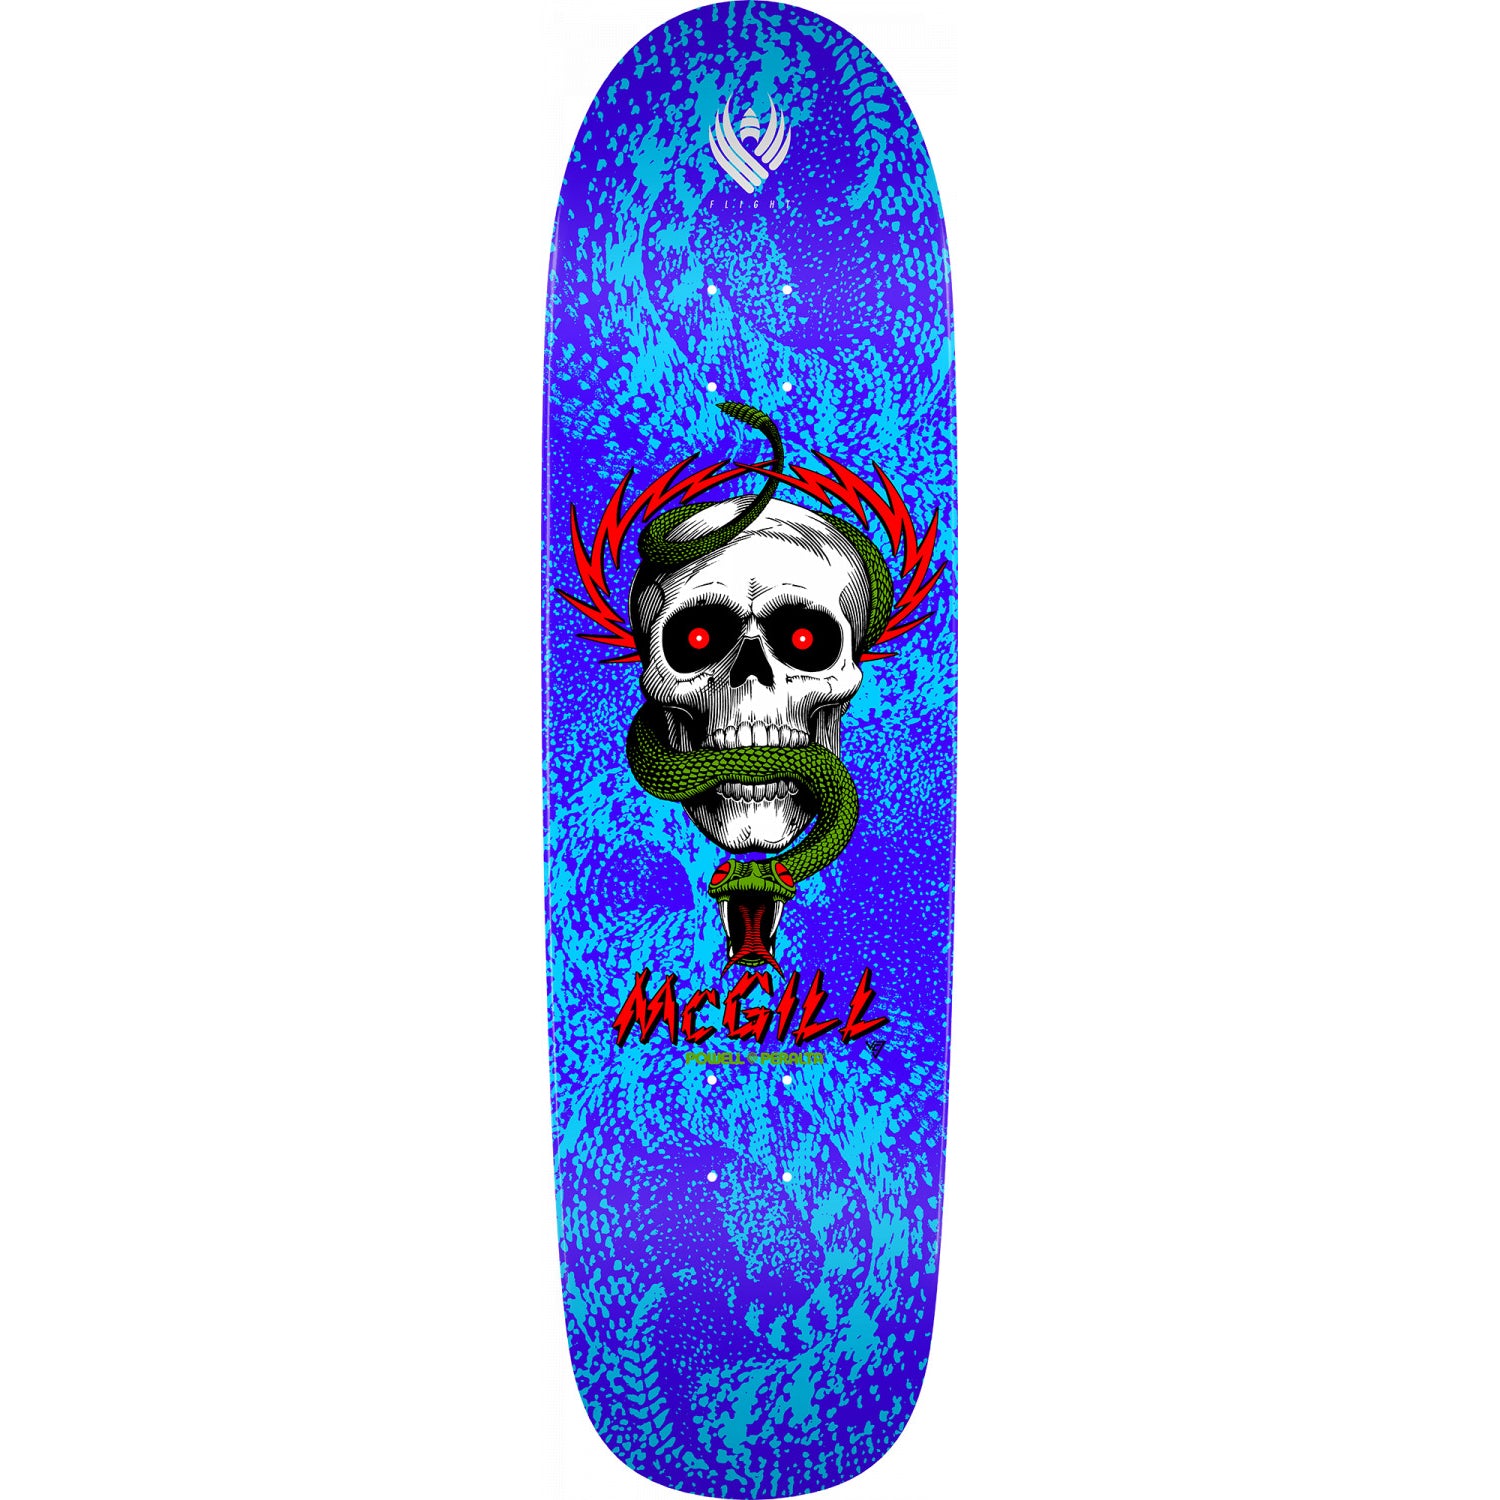 Mike McGill Skull and Snake 02 Powell Peralta Flight Skateboard Deck